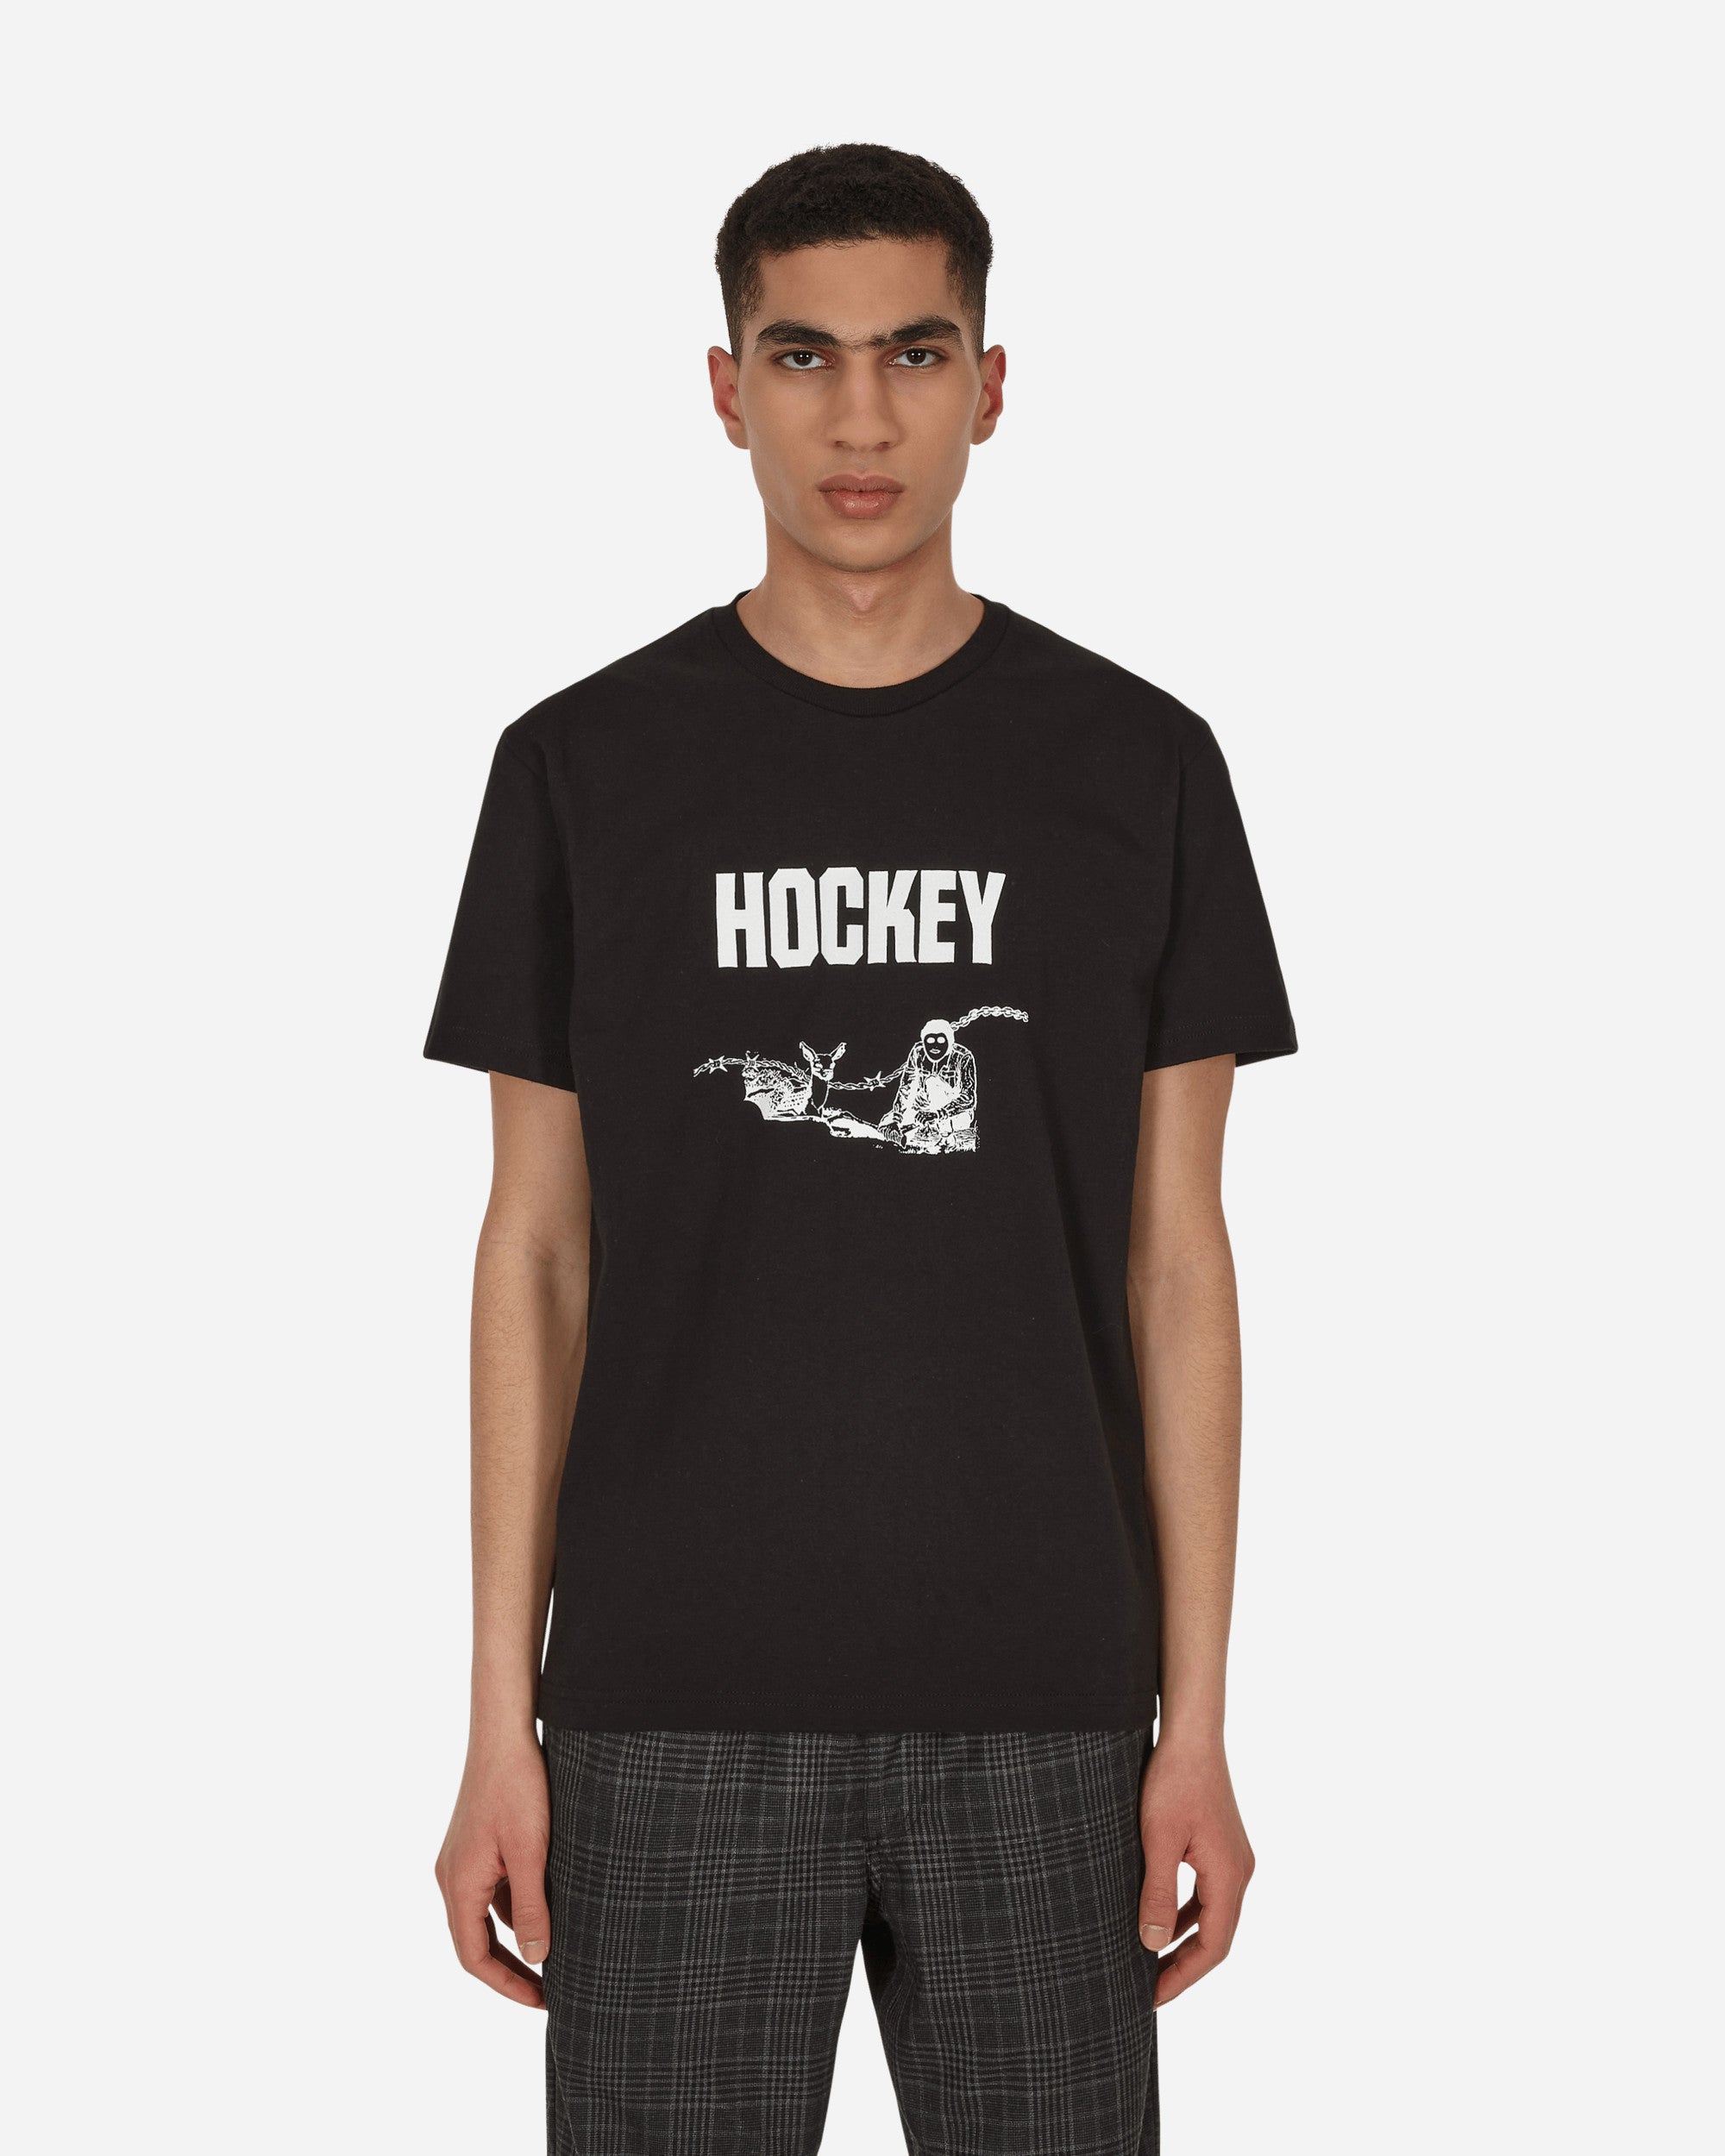 Hockey Whisper T-Shirt Black - S